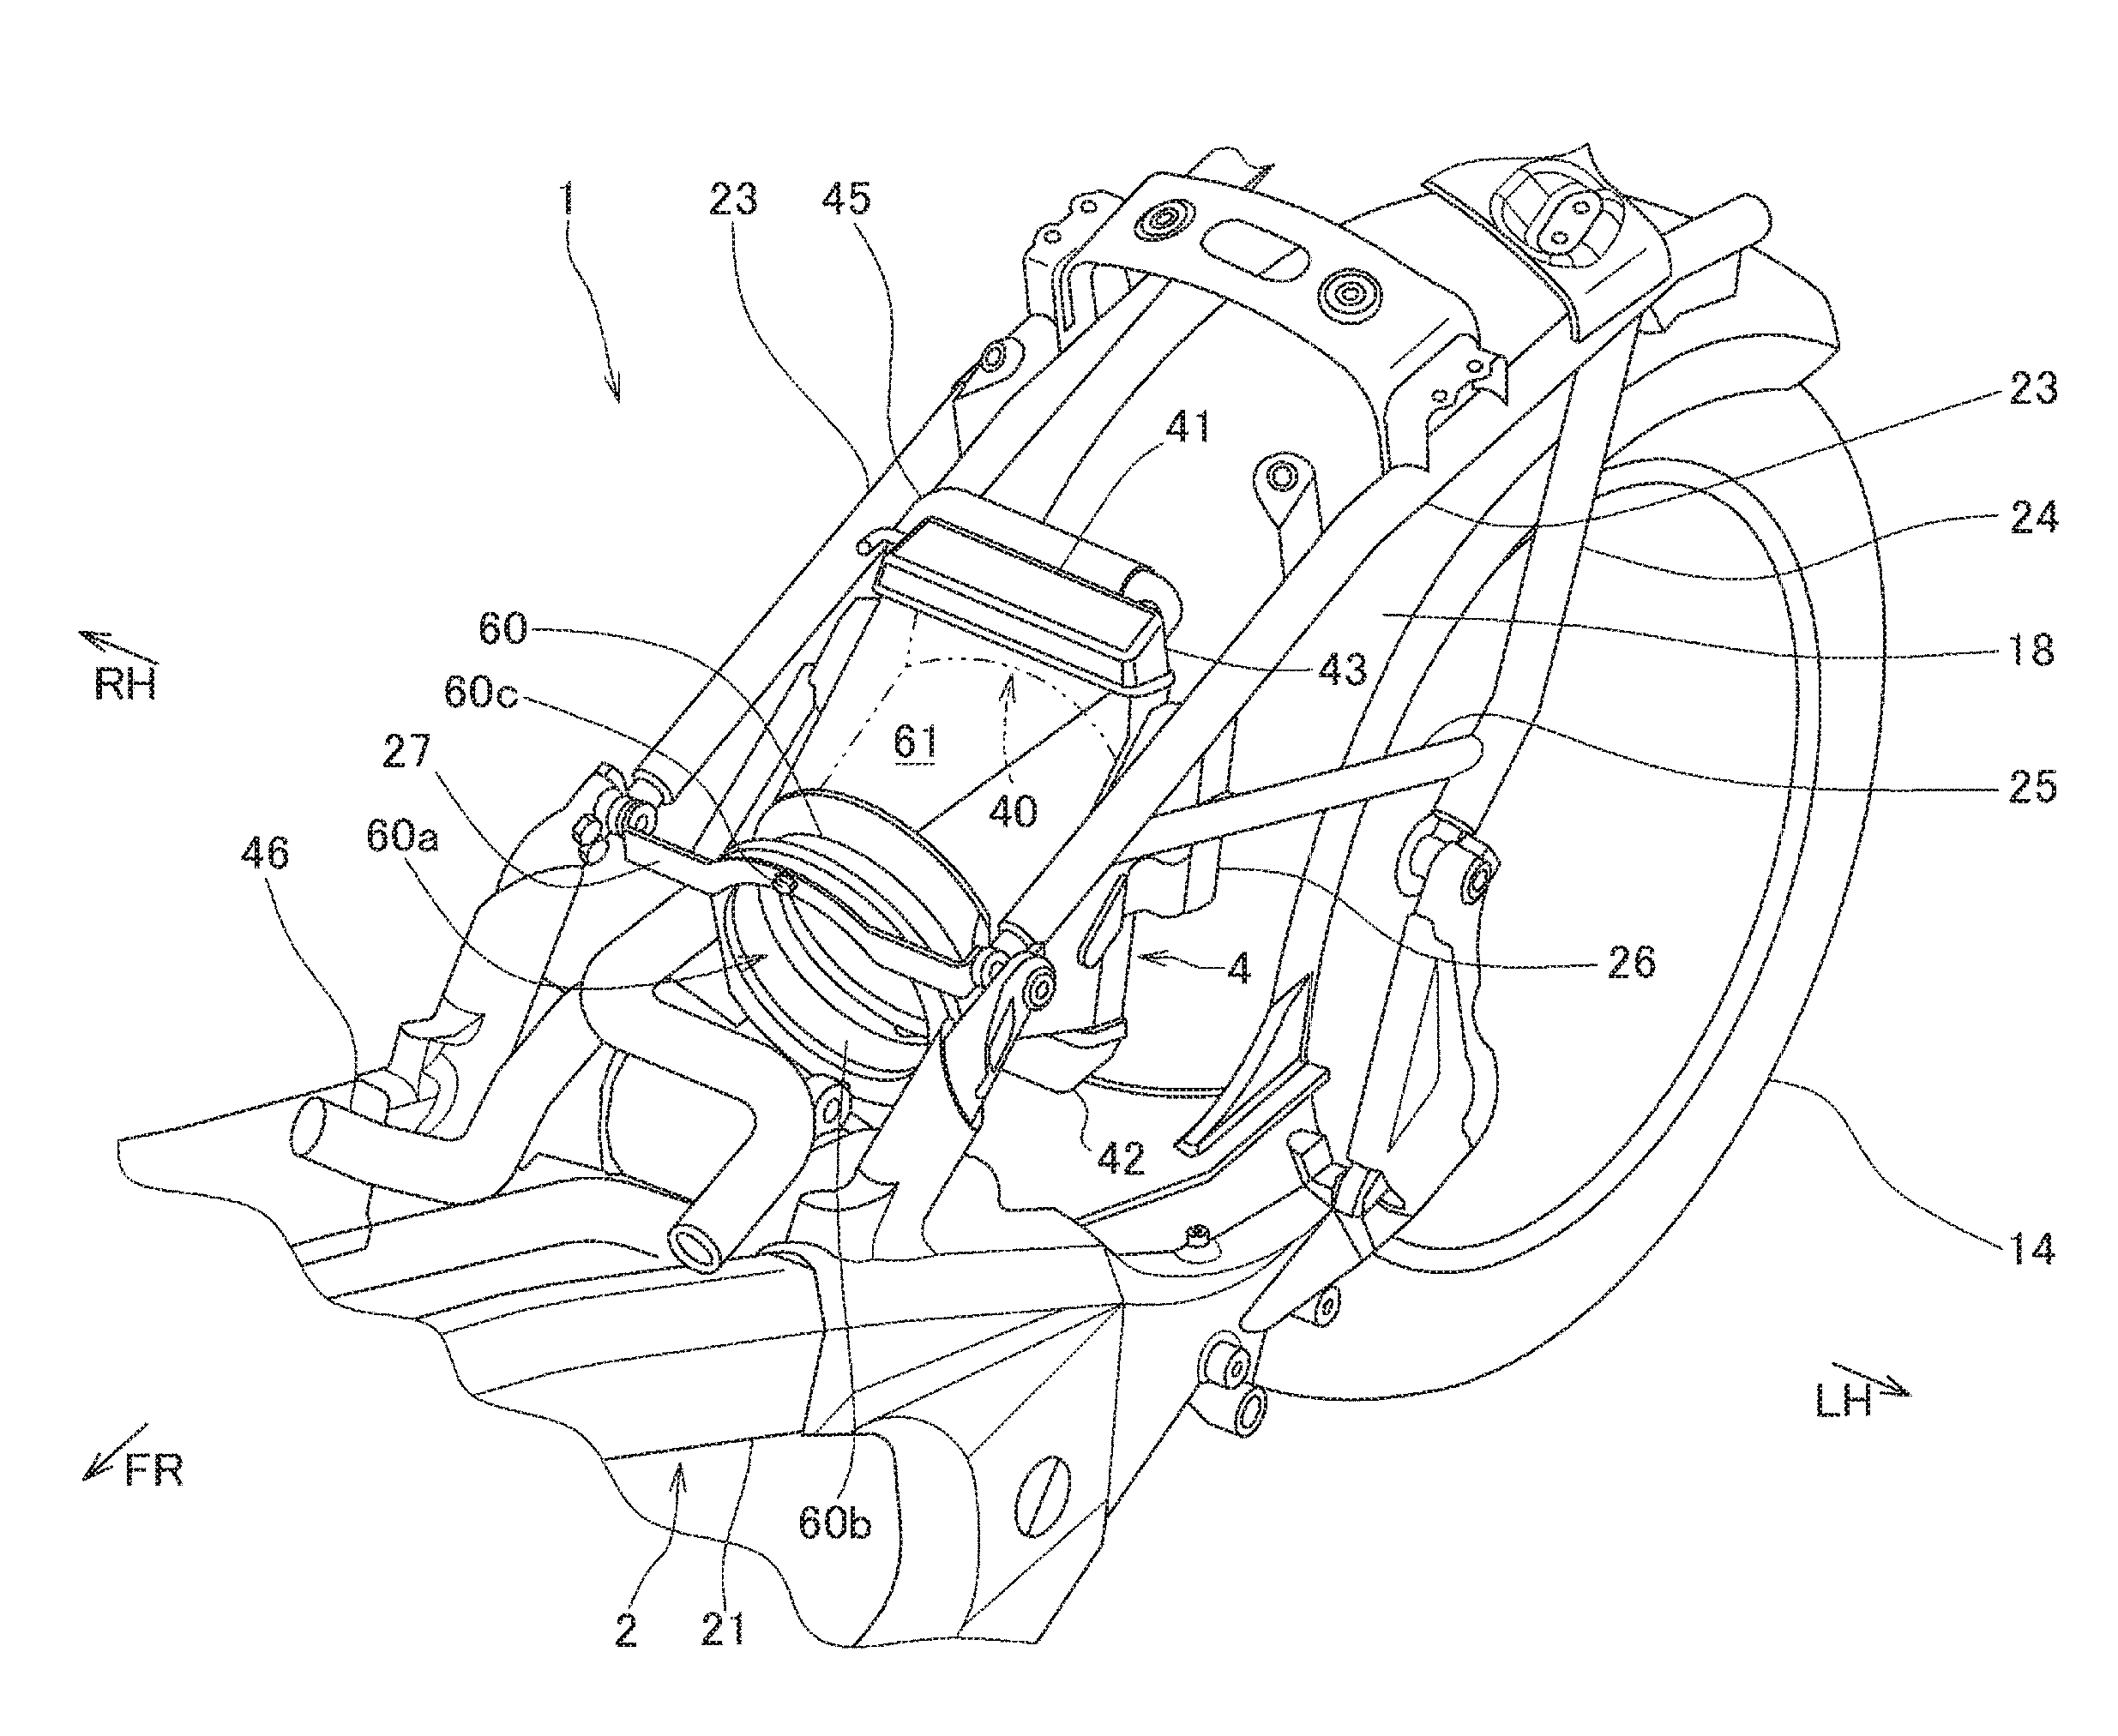 Radiator arrangement structure for saddle-ride type vehicles